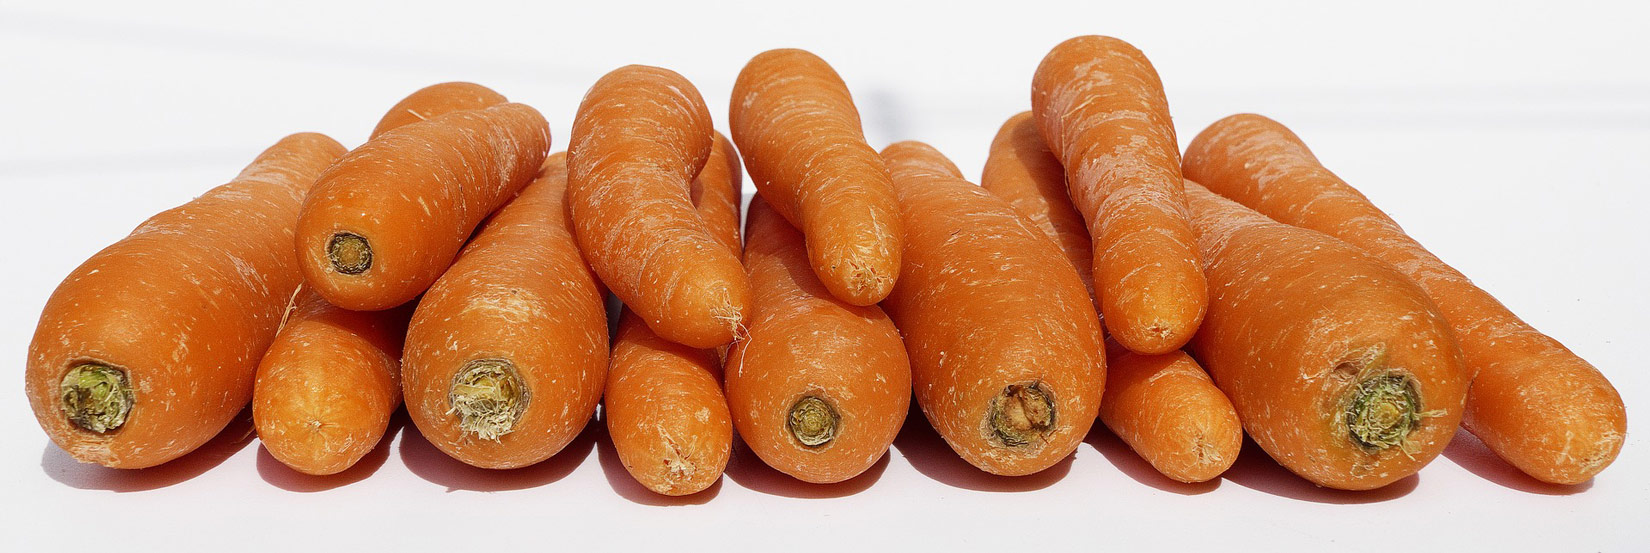 Fotografija prikazuje zrele narančaste mrkve.